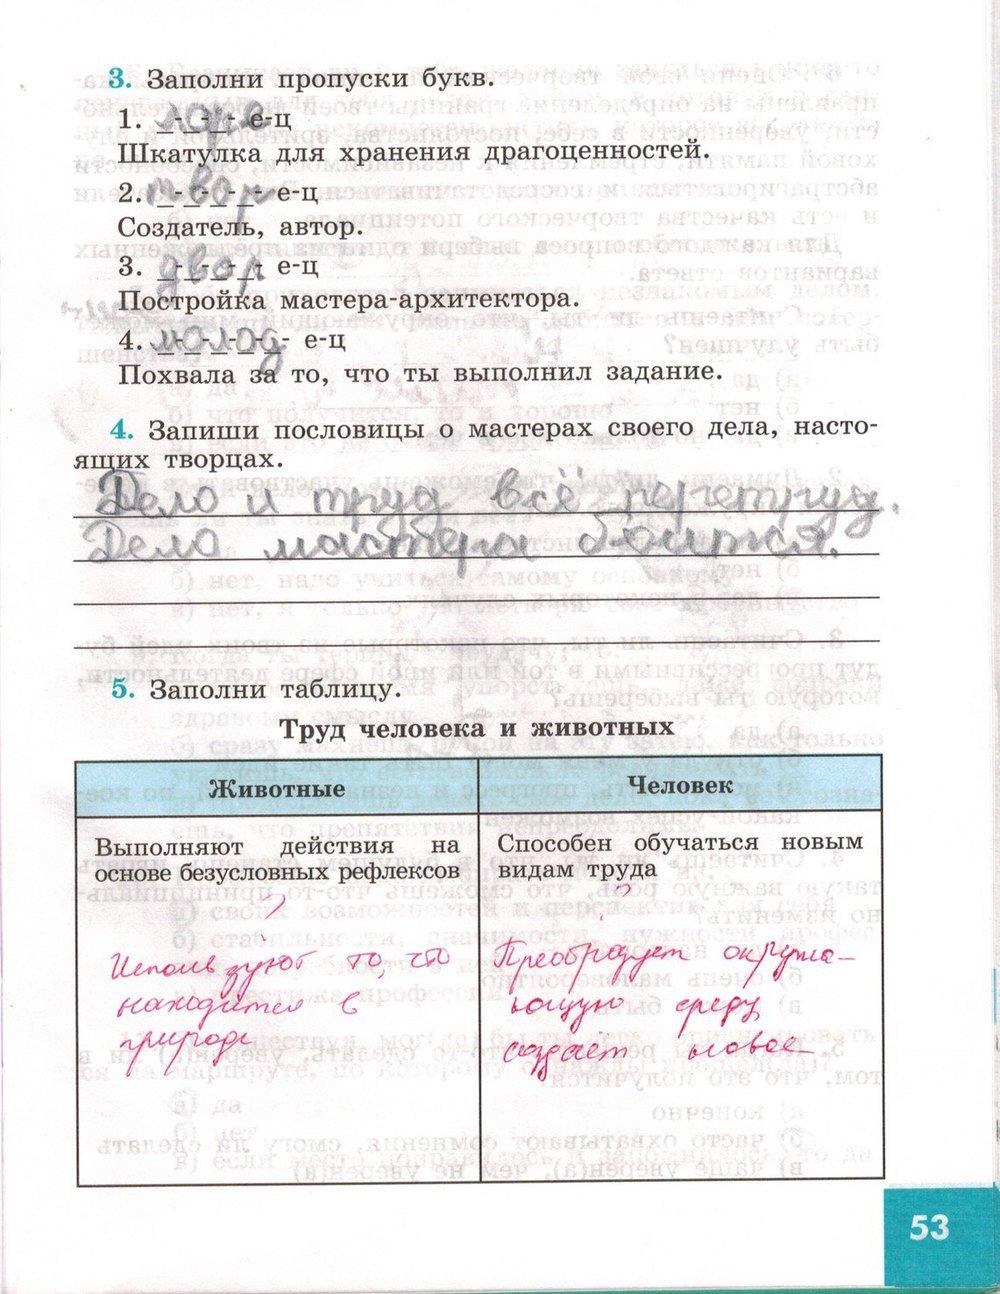 гдз 5 класс рабочая тетрадь страница 53 обществознание Иванова, Хотеенкова